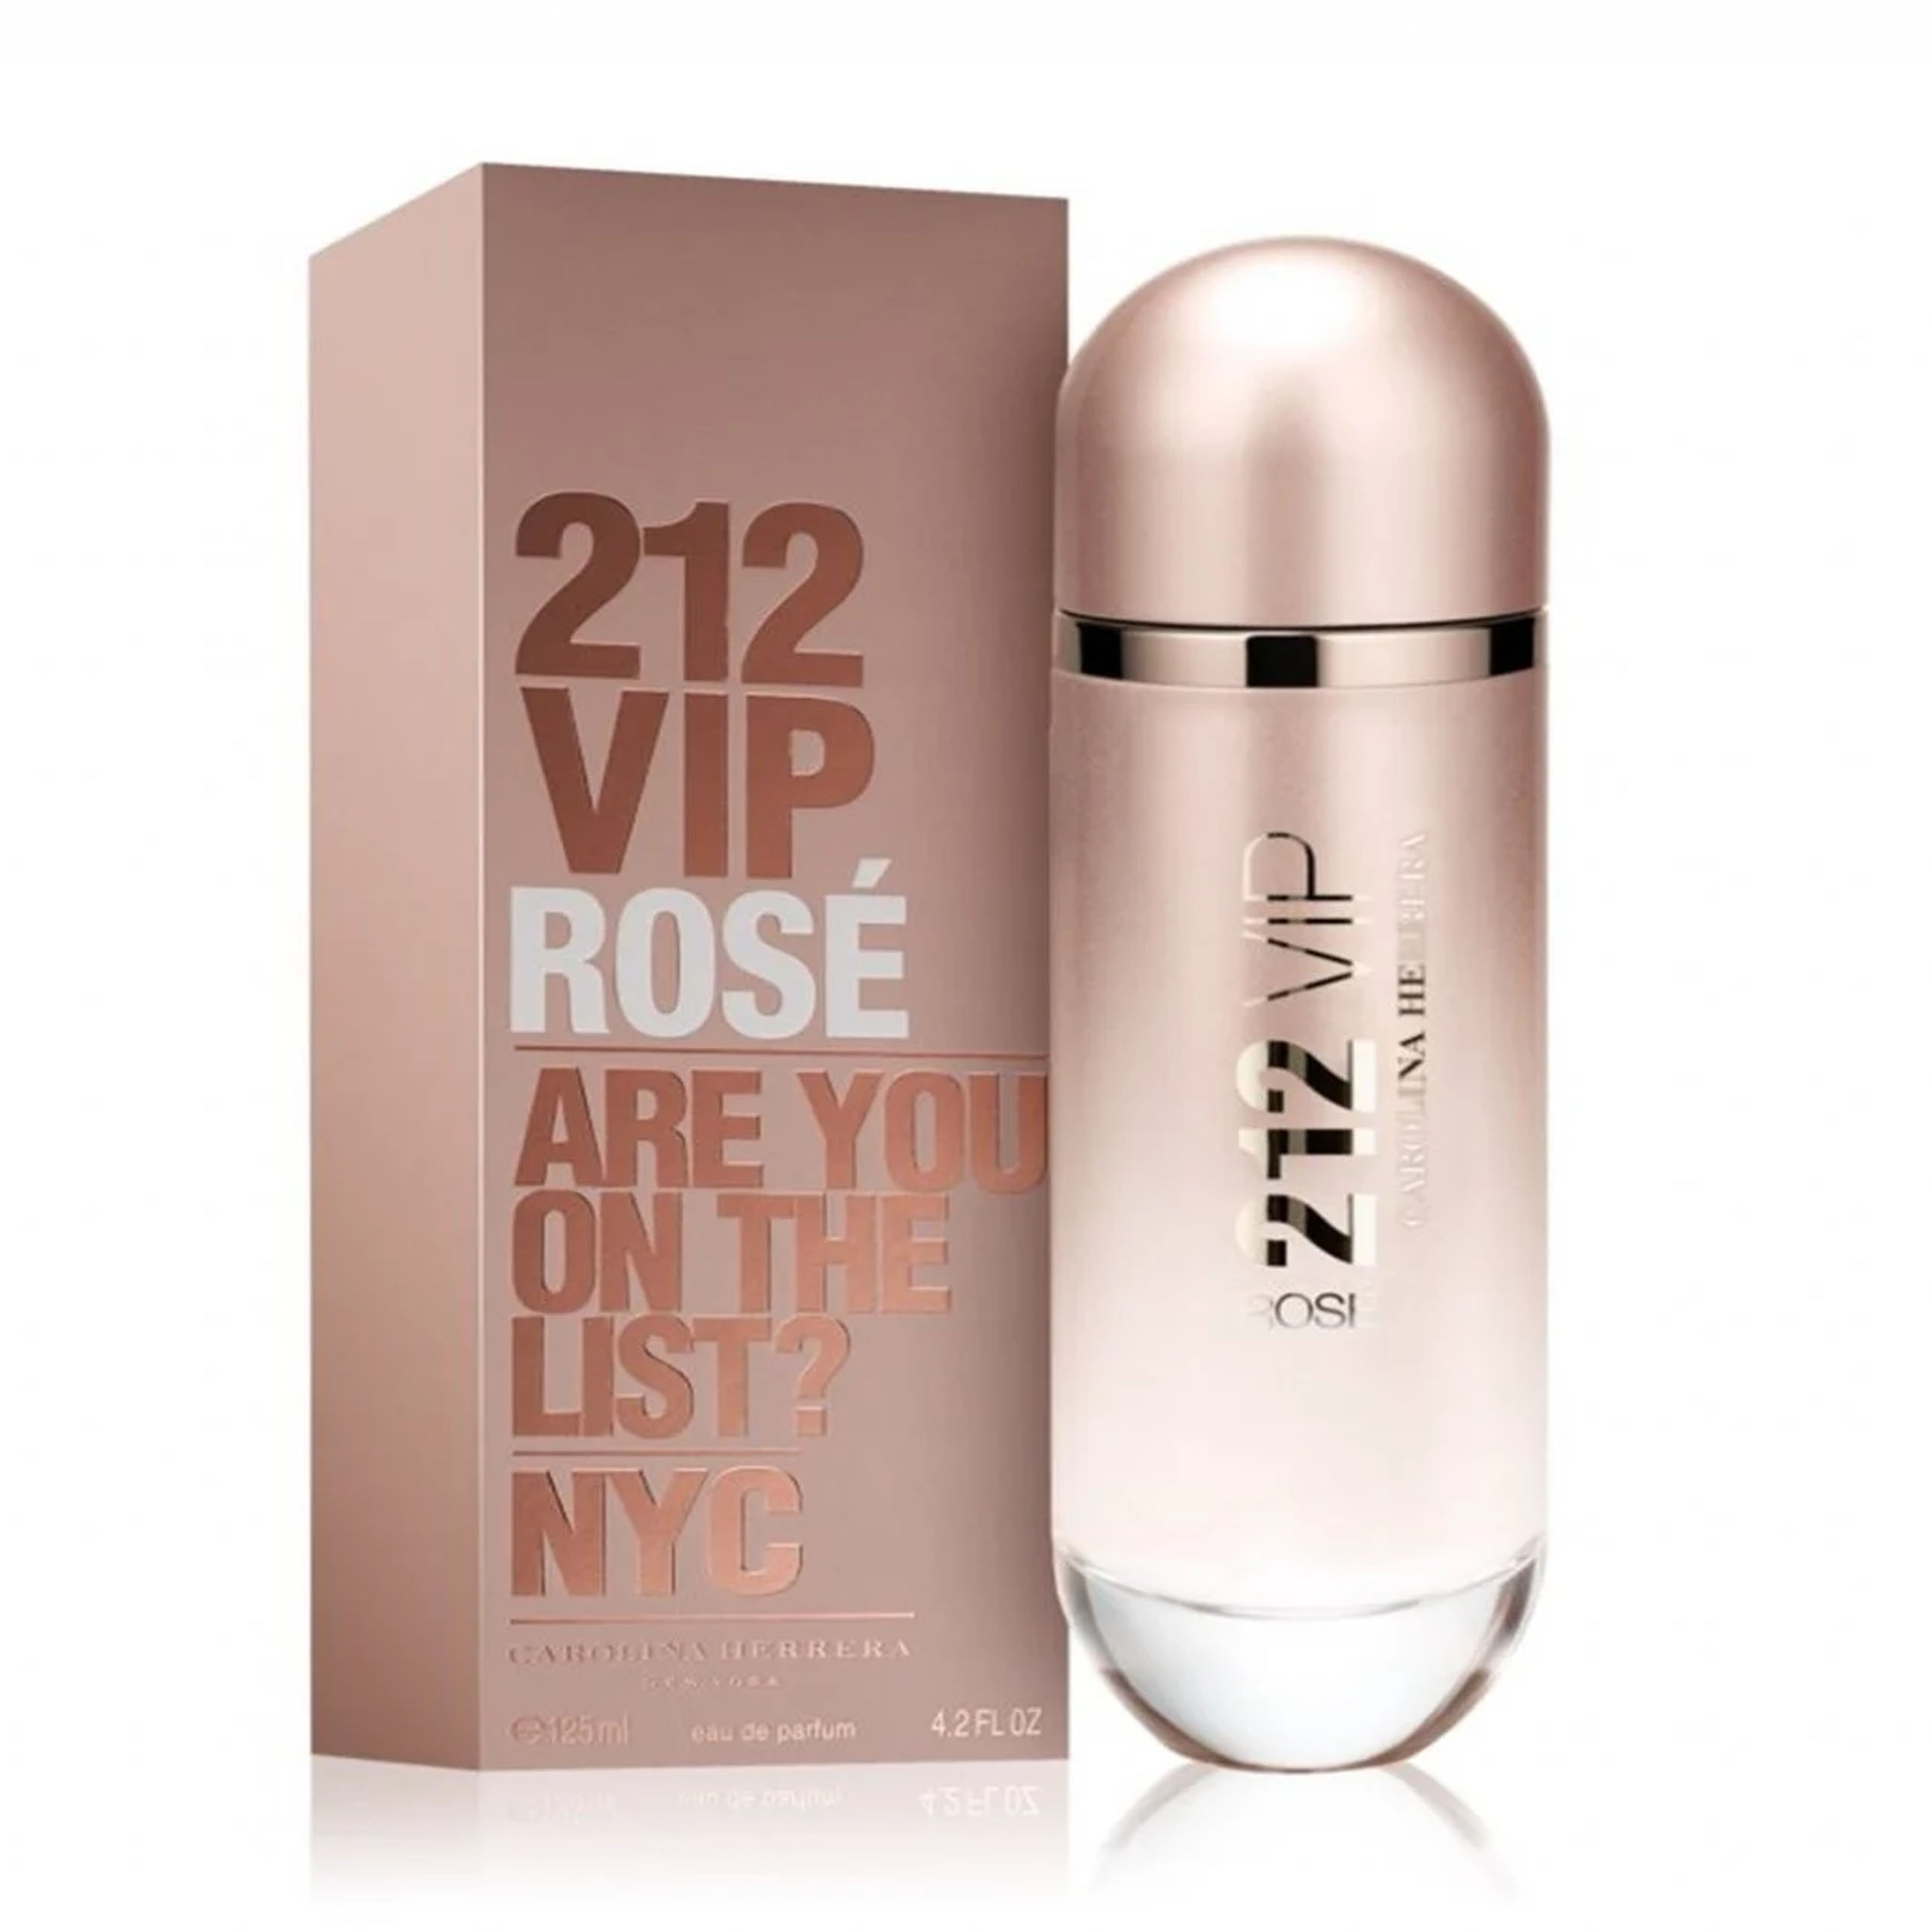 Perfume 212 Vip Rosé Carolina Herrera  (Replica Con Fragancia Importada)- Mujer (1)